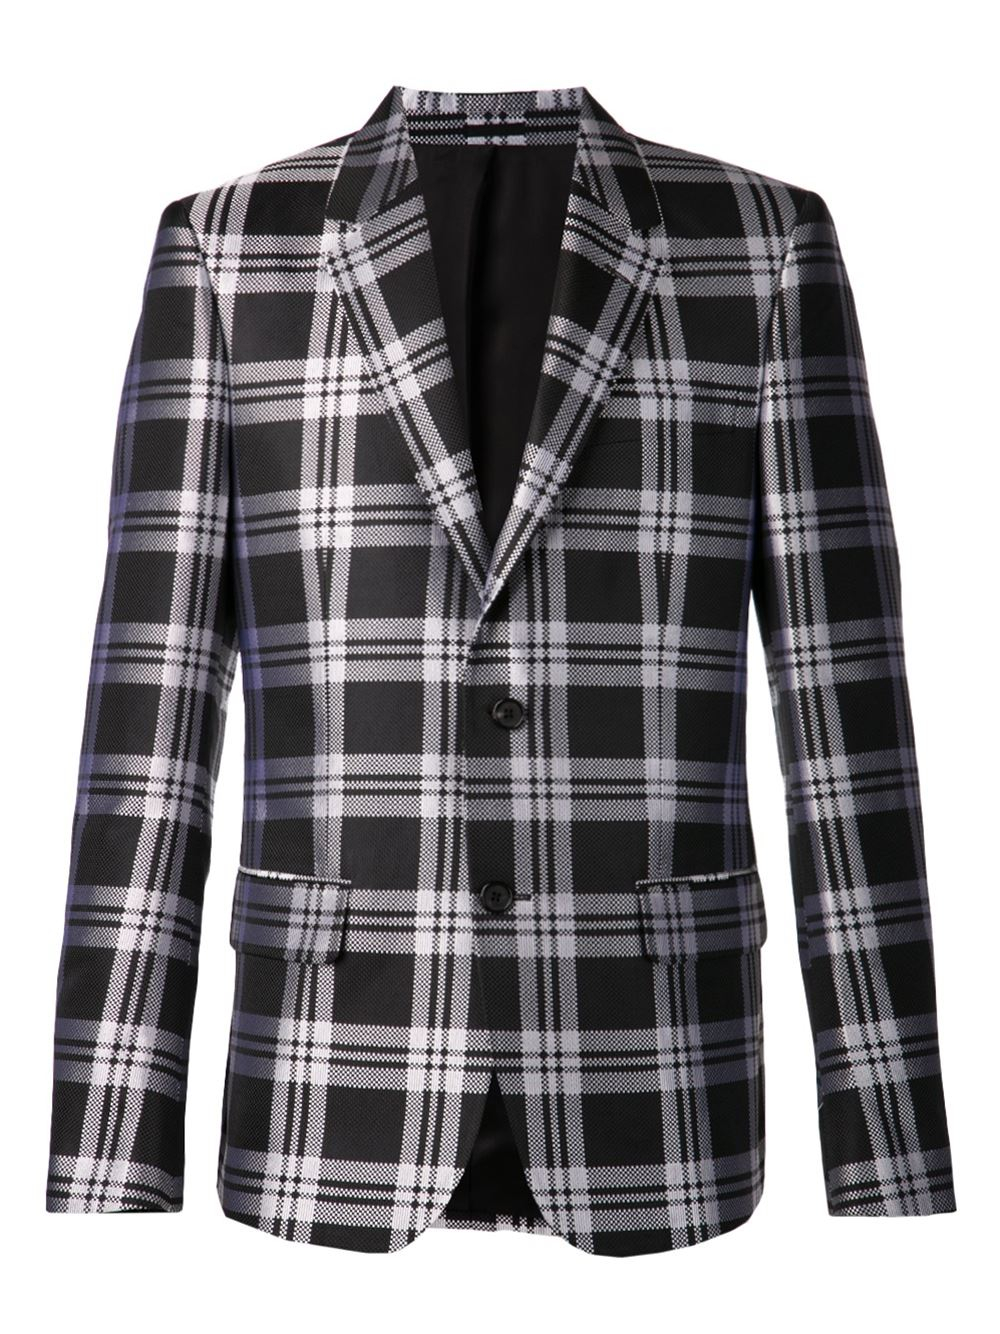 Lyst - Alexander Mcqueen Plaid Suit Jacket in Black for Men